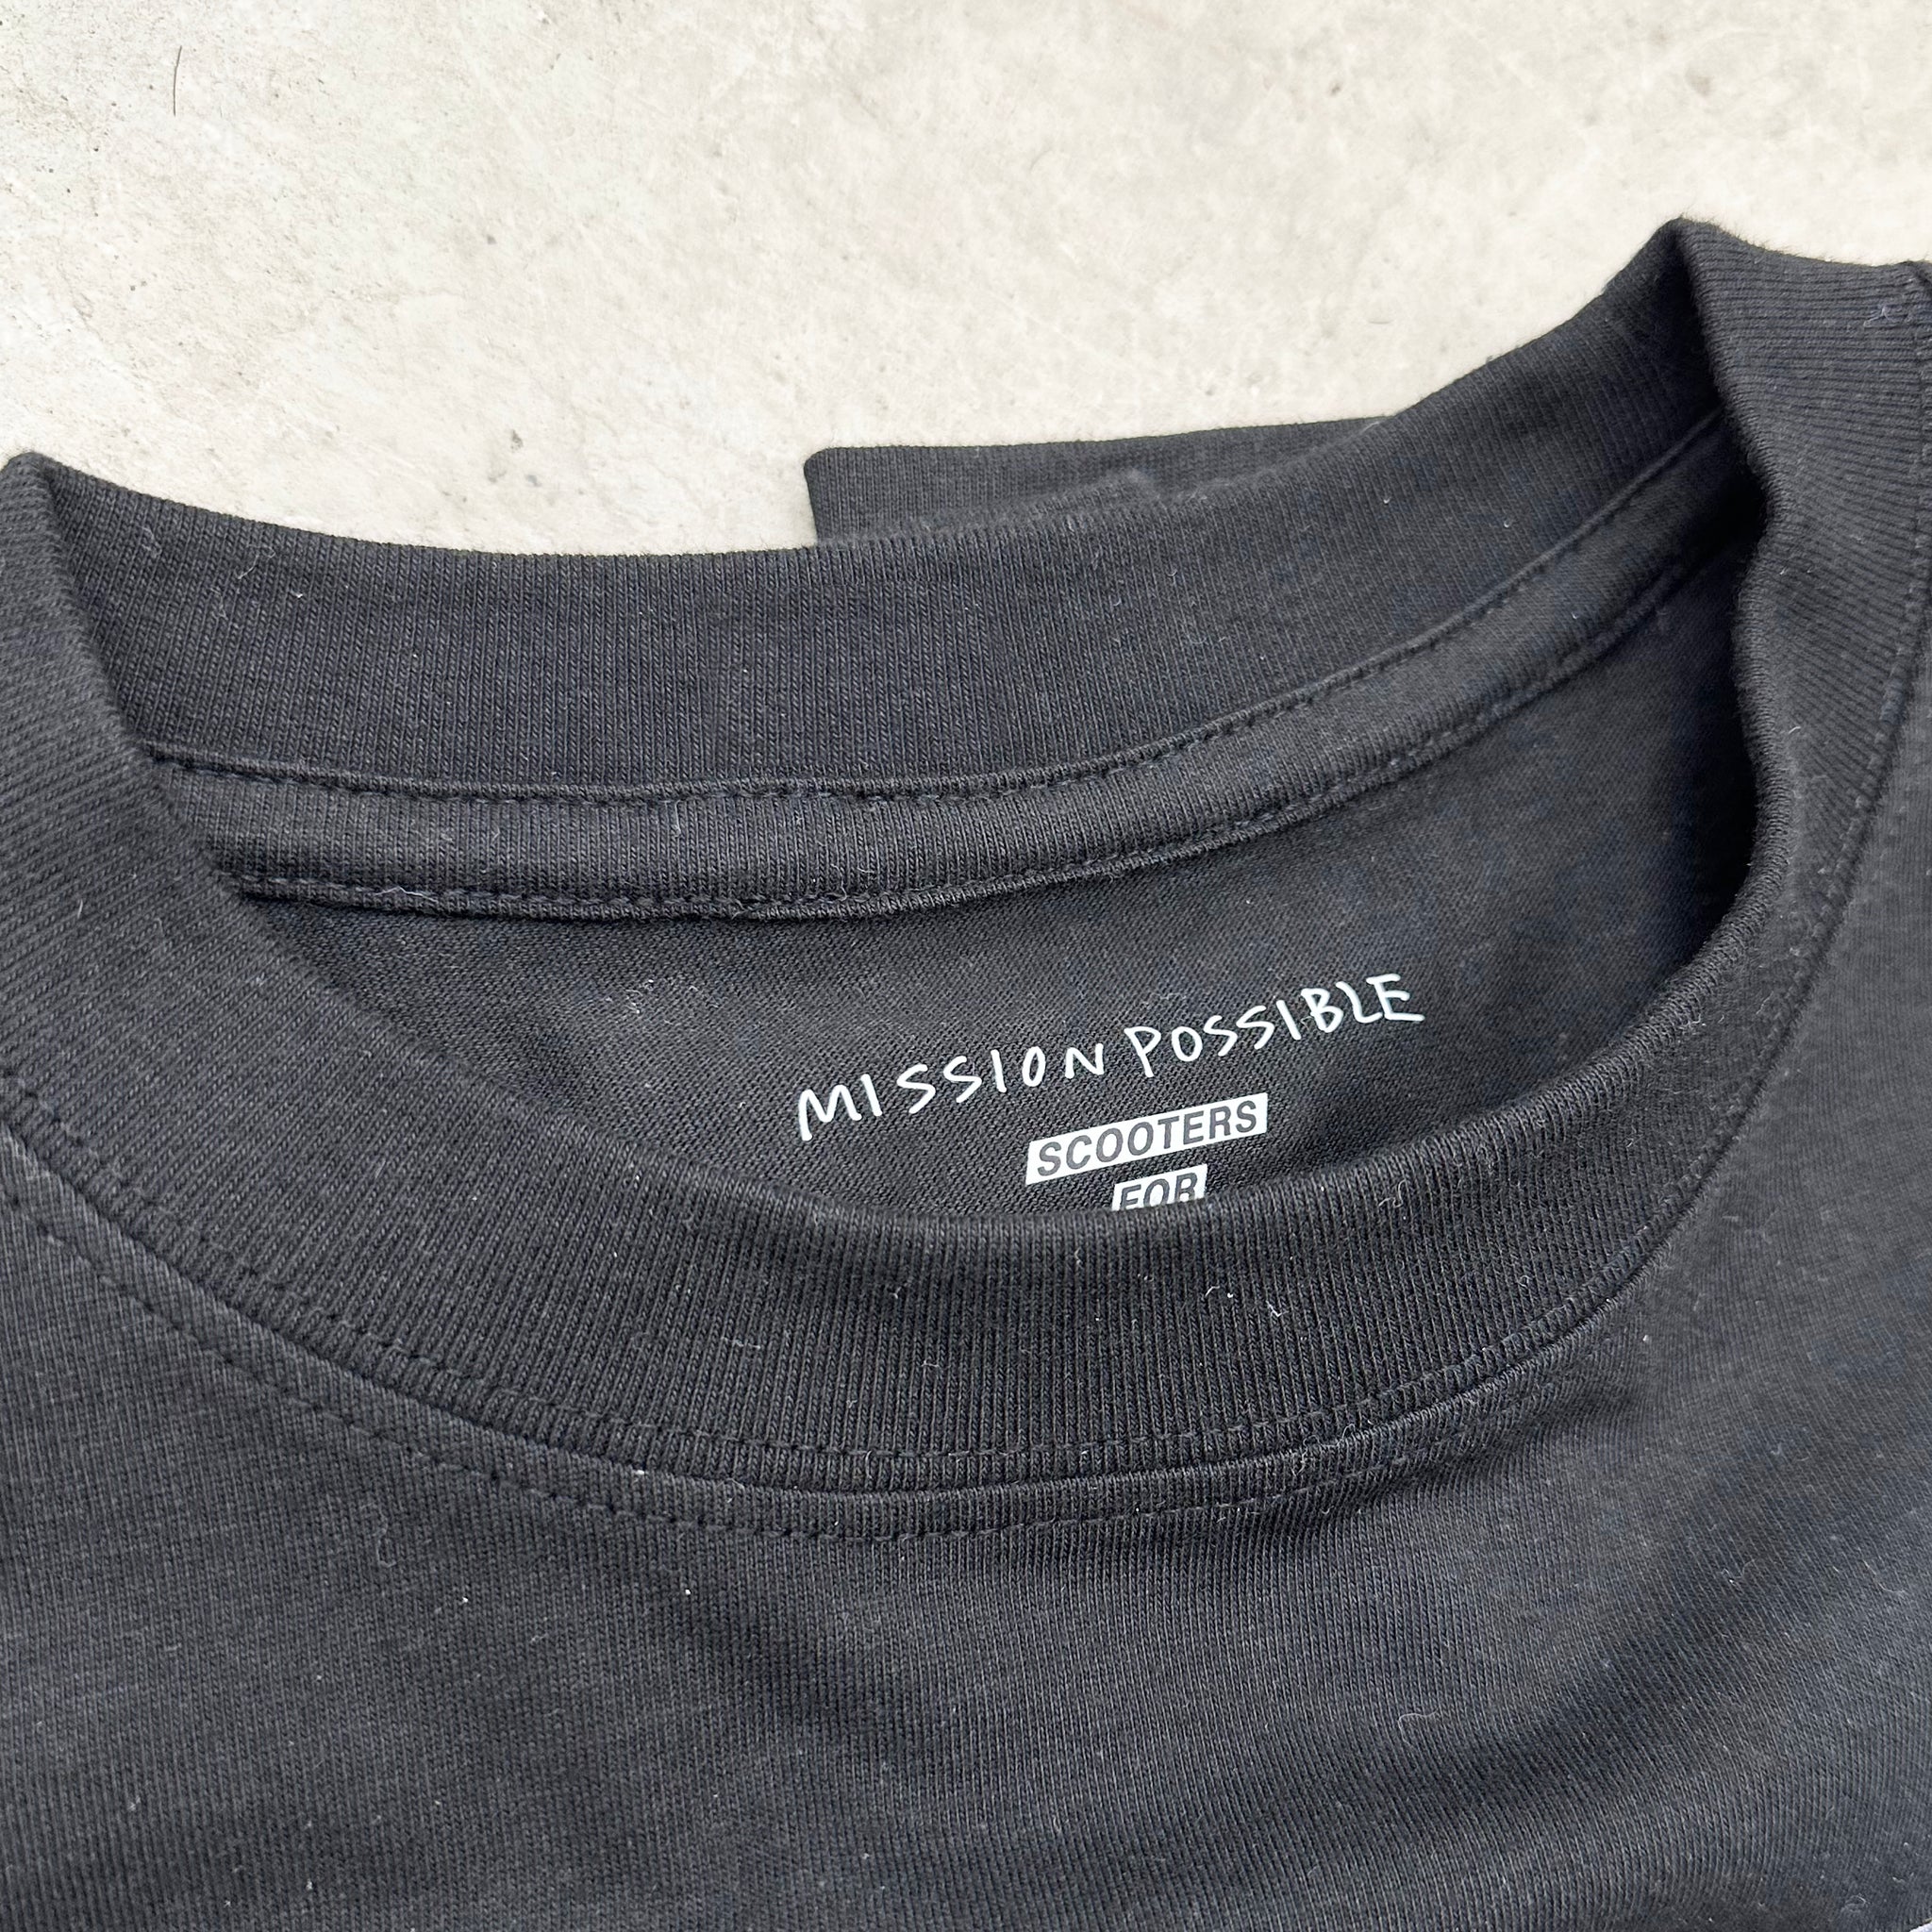 Mission Possible T-shirt / Black